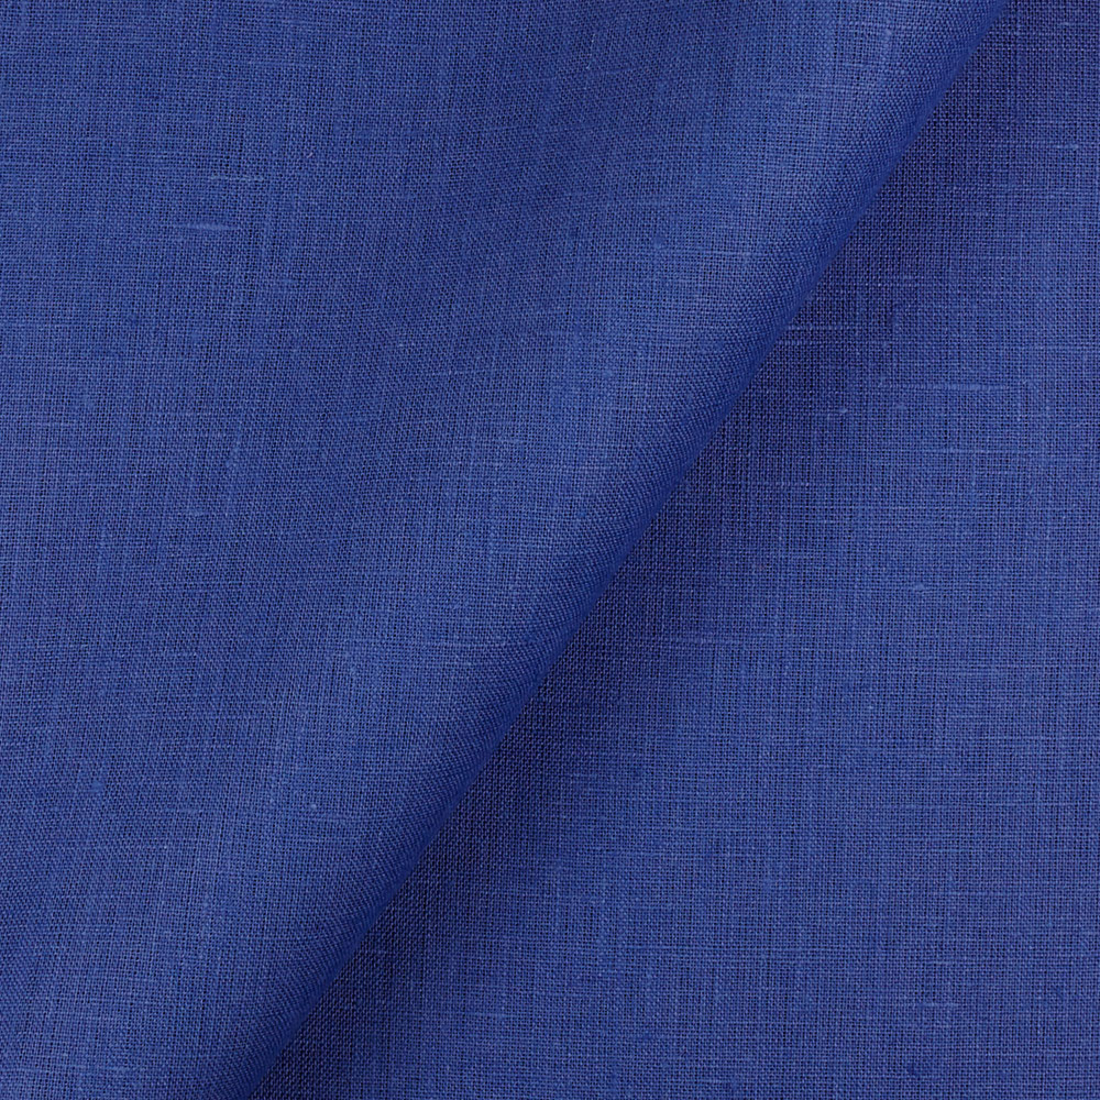 Fabric IL019 All-purpose 100% Linen Fabric Ultramarine Softened